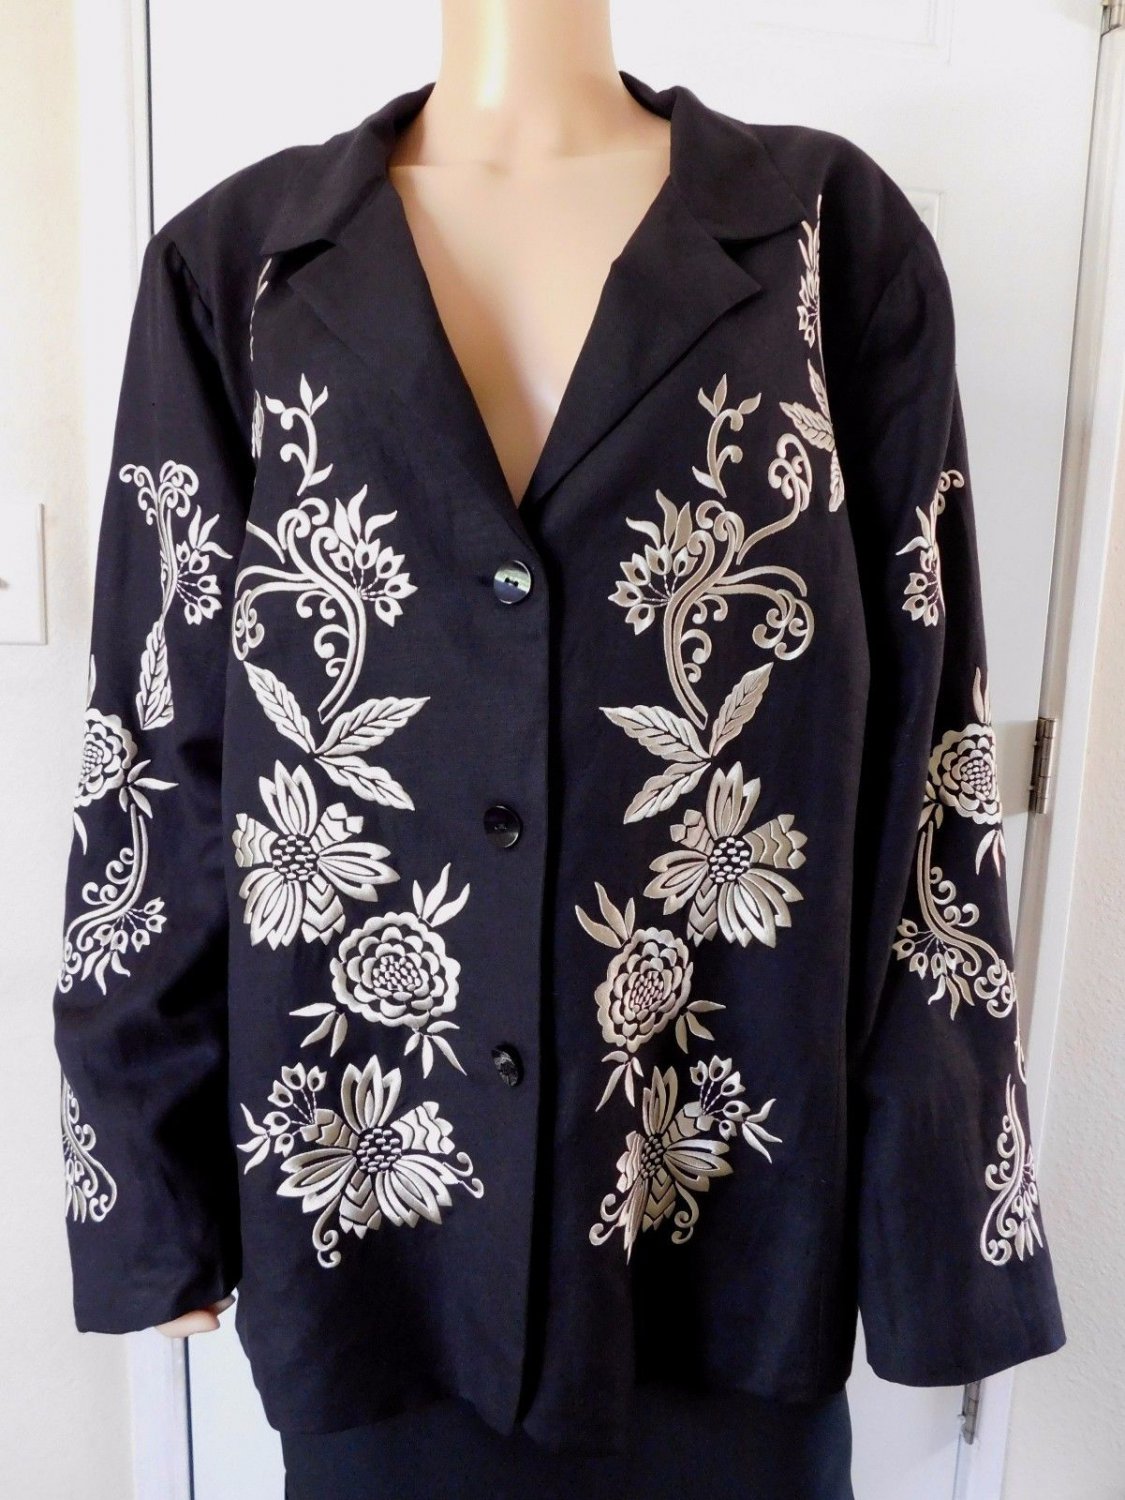 VICTOR COSTA Jacket New Embroidered Black Linen Blazer sz 3X New